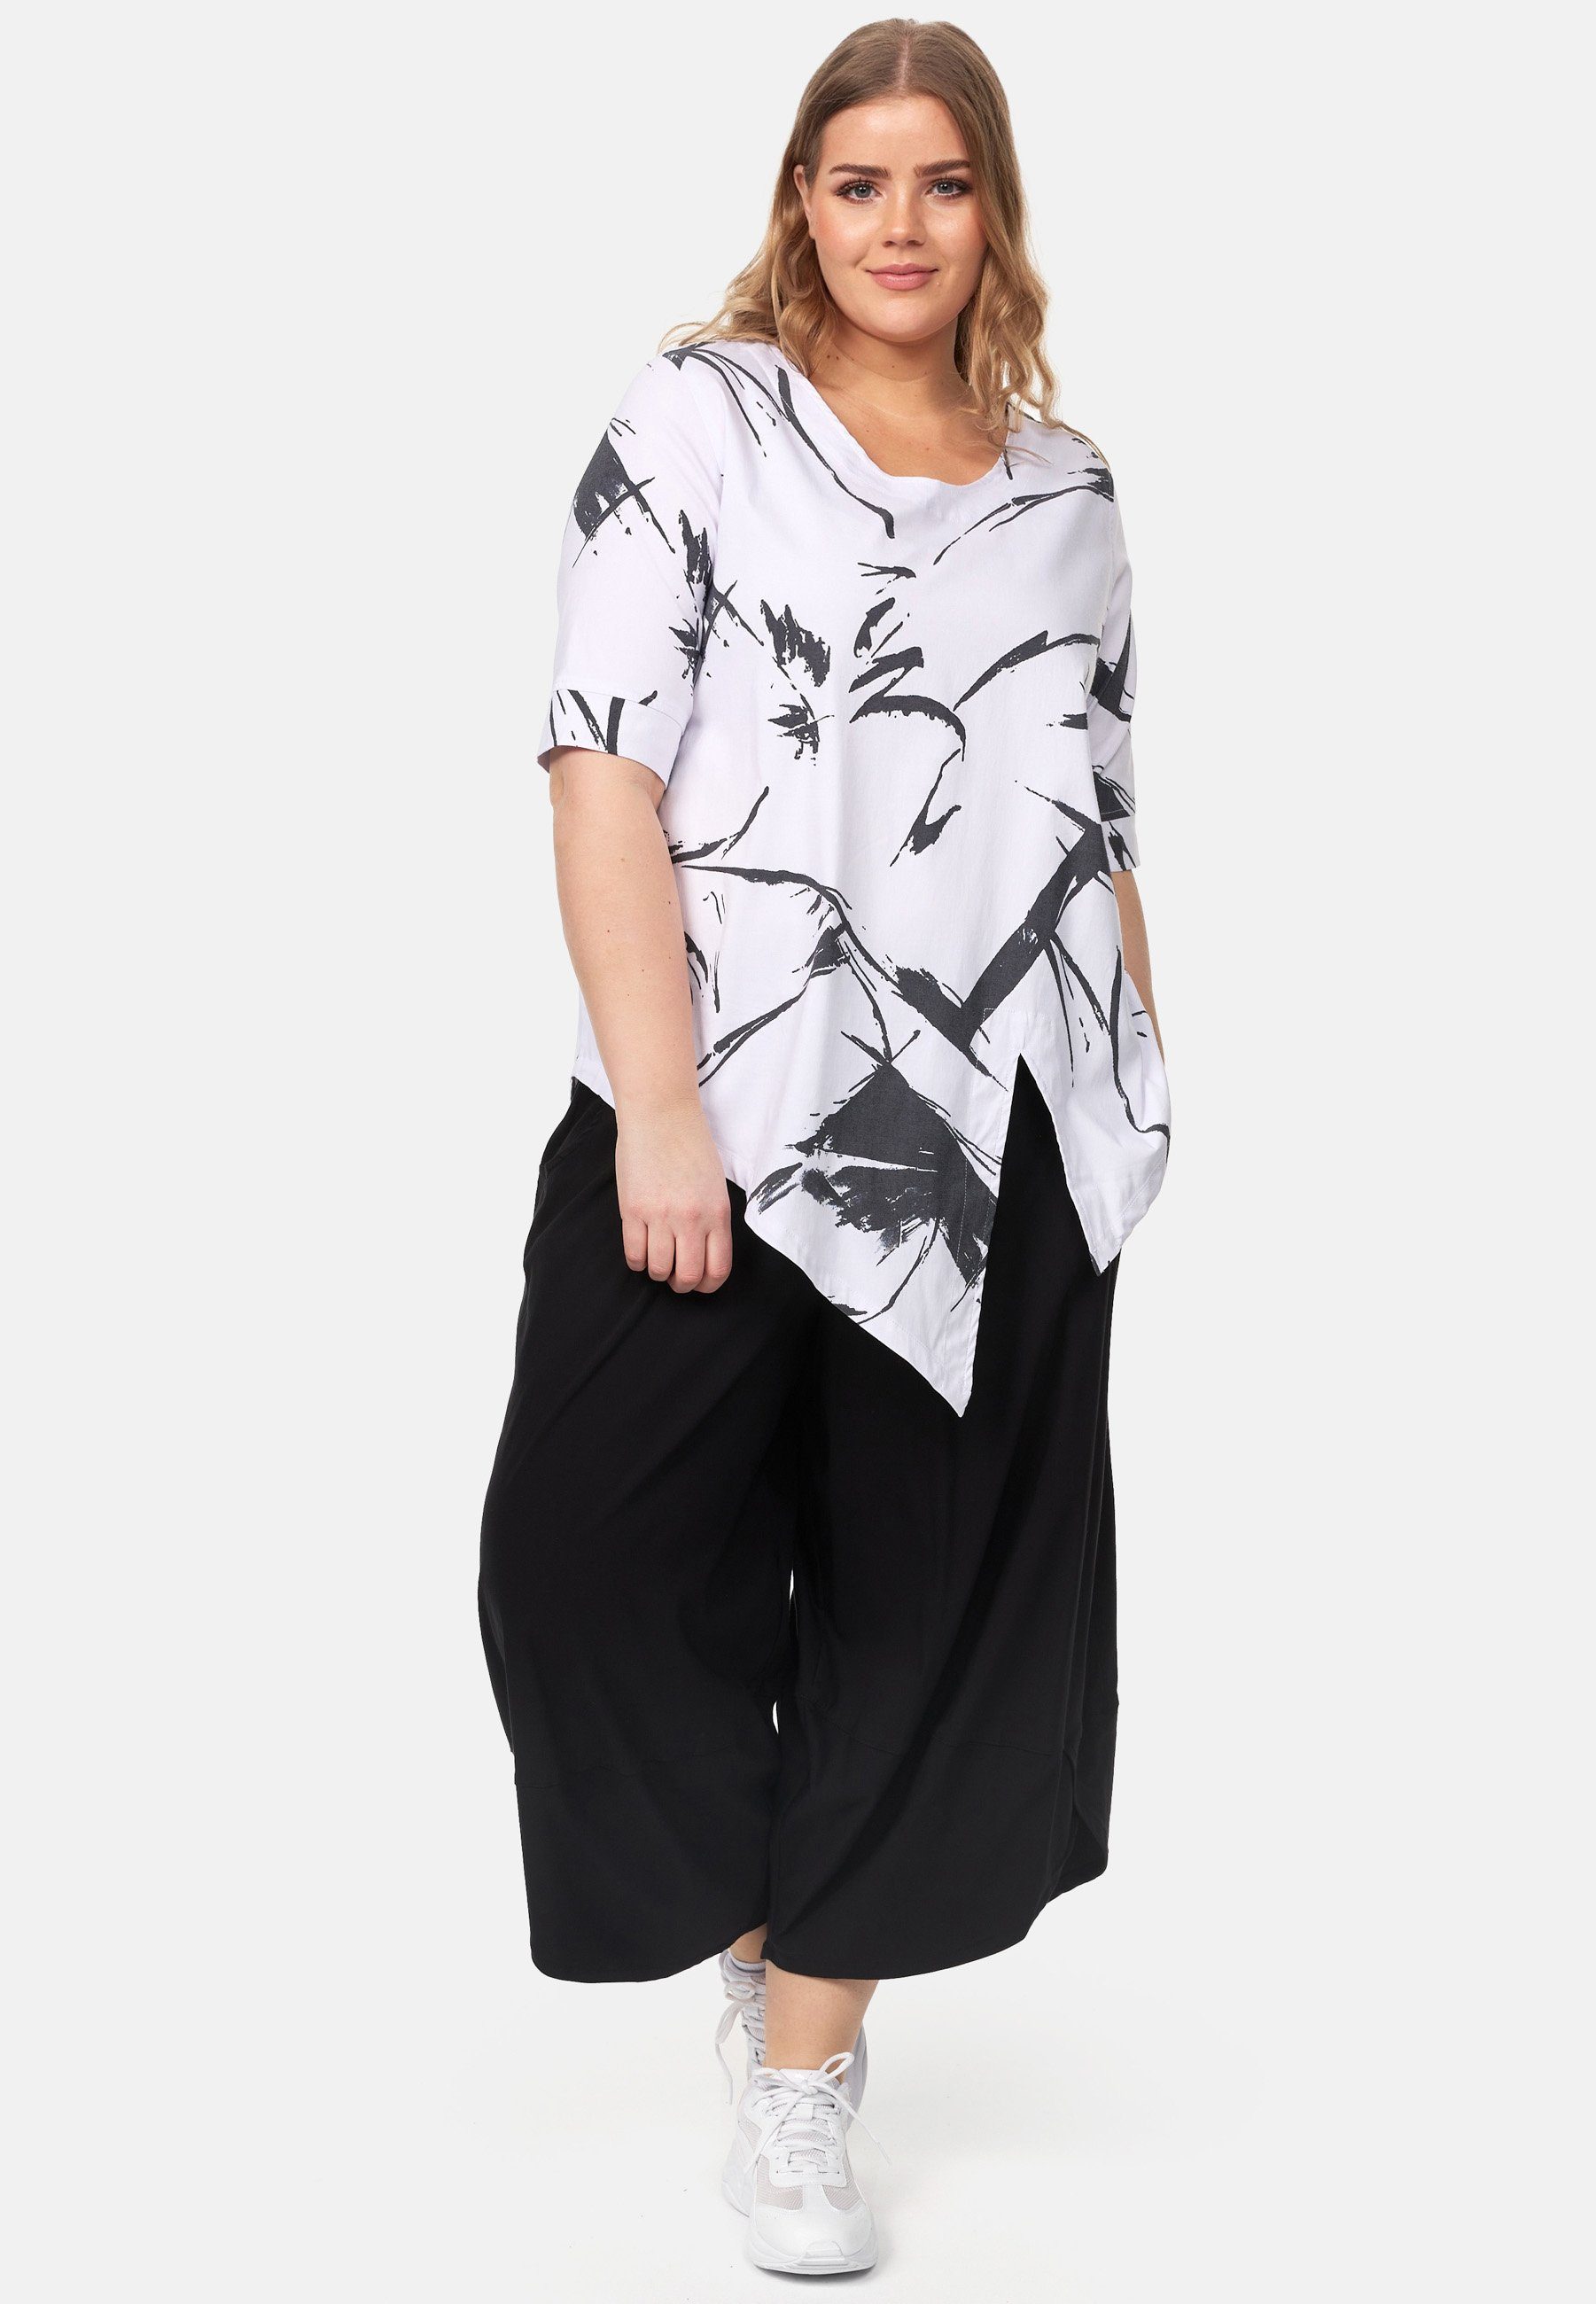 Kekoo Tunikashirt Tunika Shirt Saum A-Line asymmetrischem Muster 'Flora' Weiß mit in